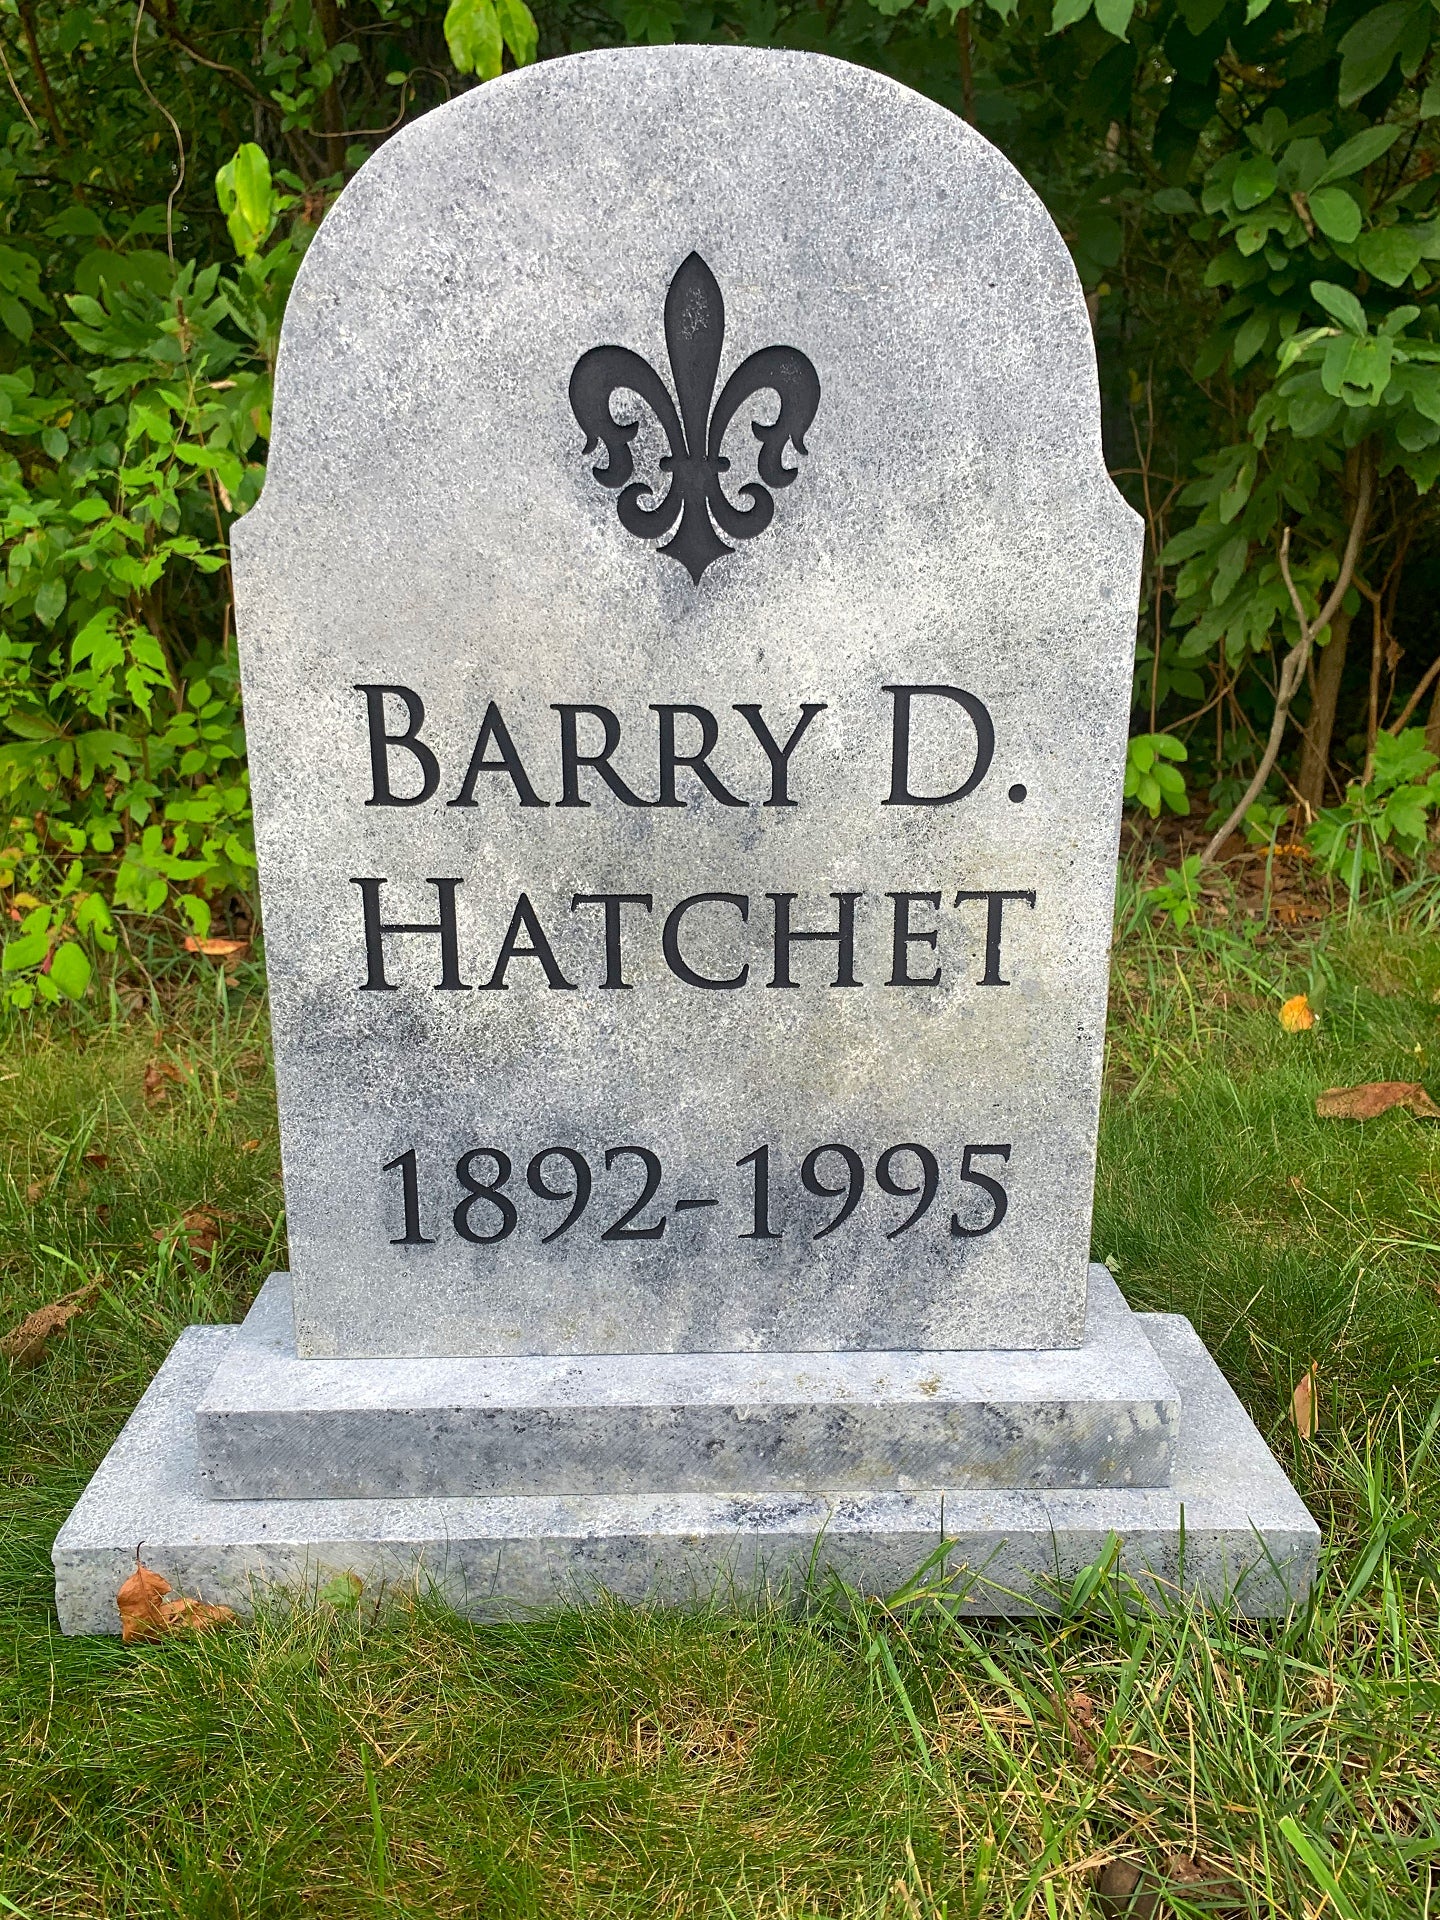 Barry D. Hatchet Comical Tombstone